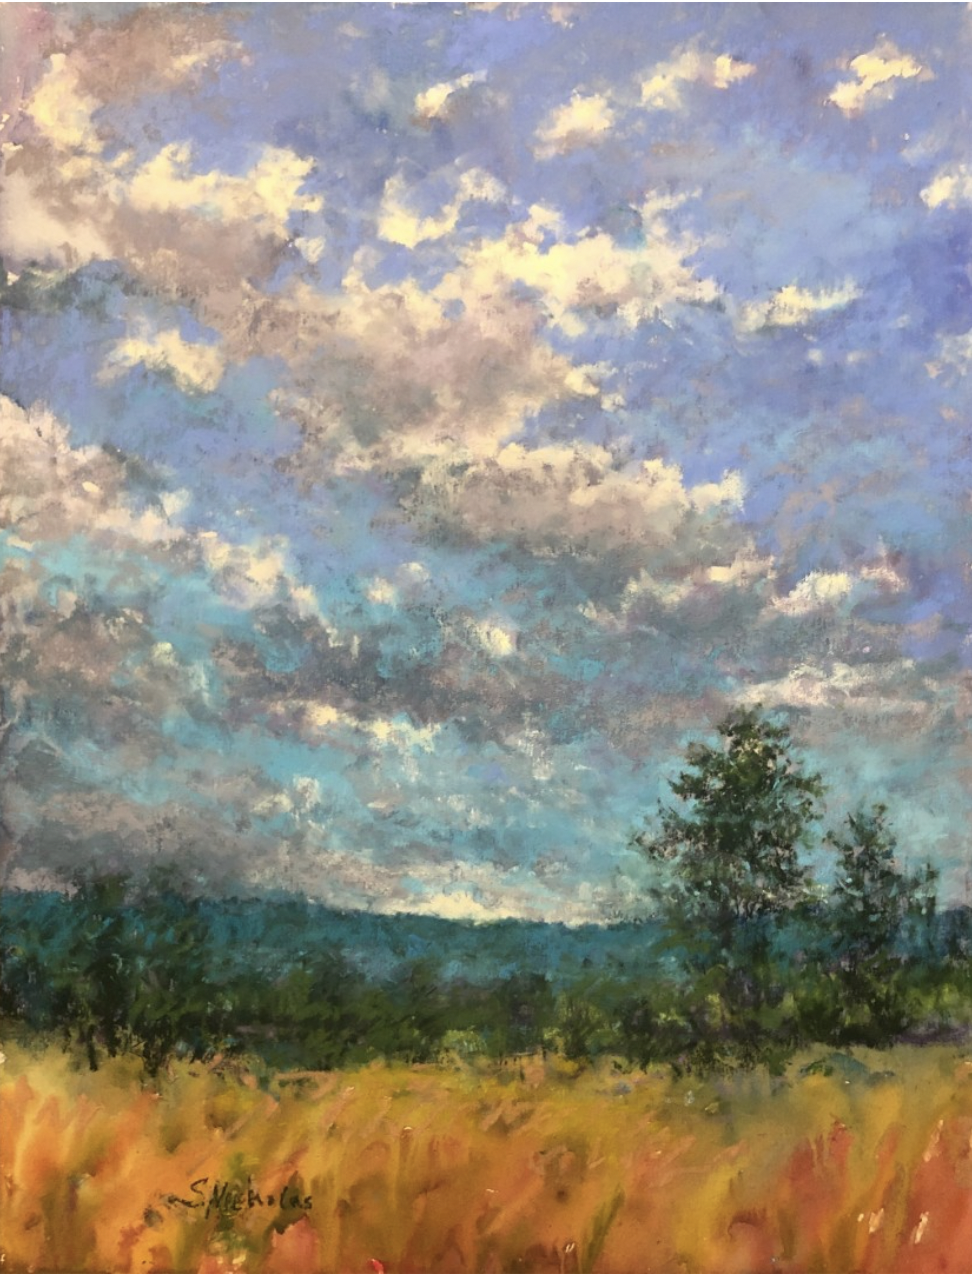 Susan Nicholas Gephart, "Cloud Whisper," pastel, 16 x 12 in. August 2022 Plein Air Pastel Honourable Mention.